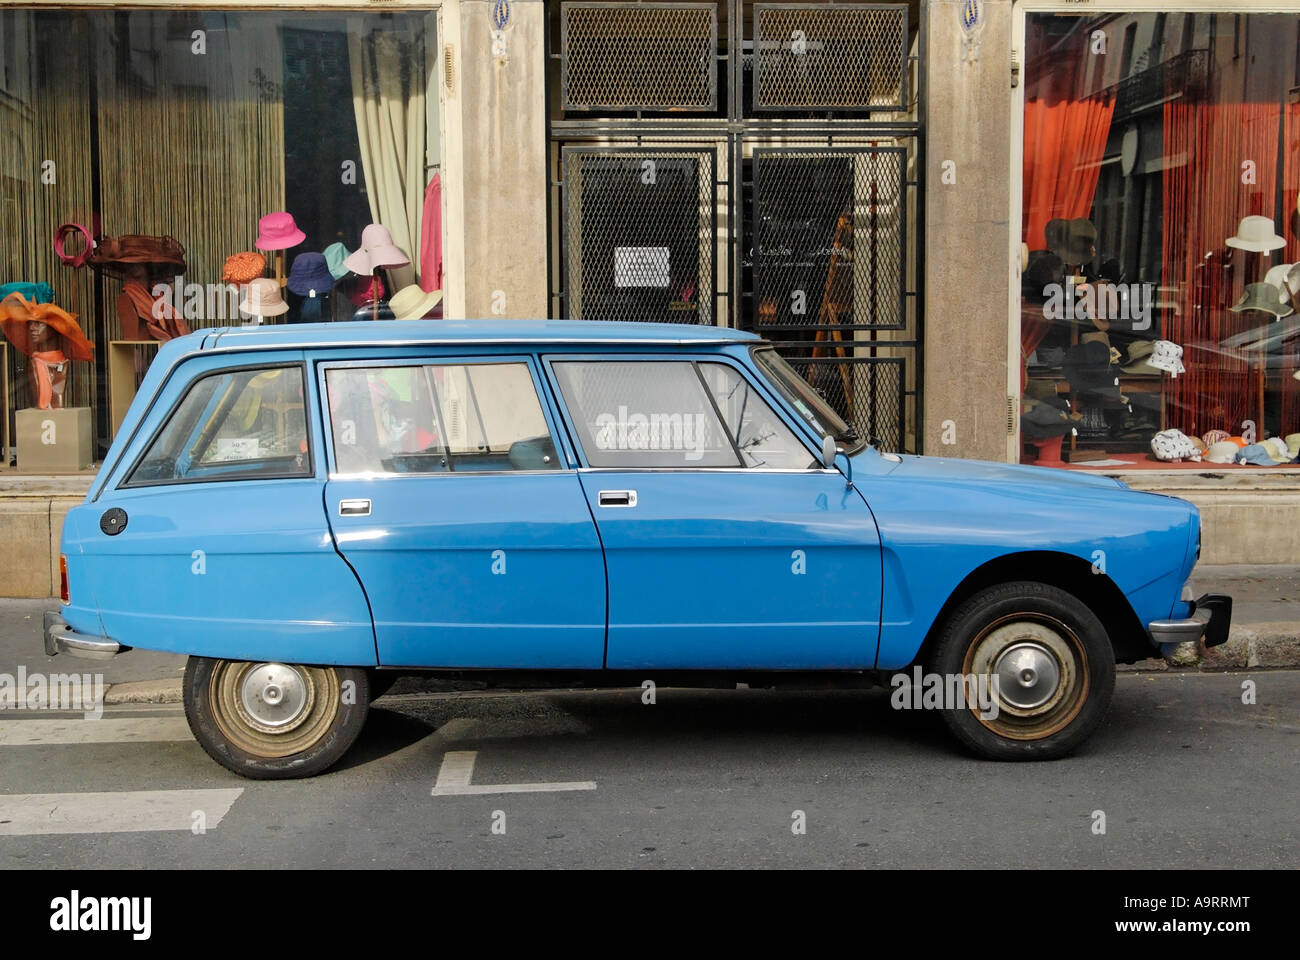 Blue Citroen parked outside old hat shop Tours France Europe Stock Photo